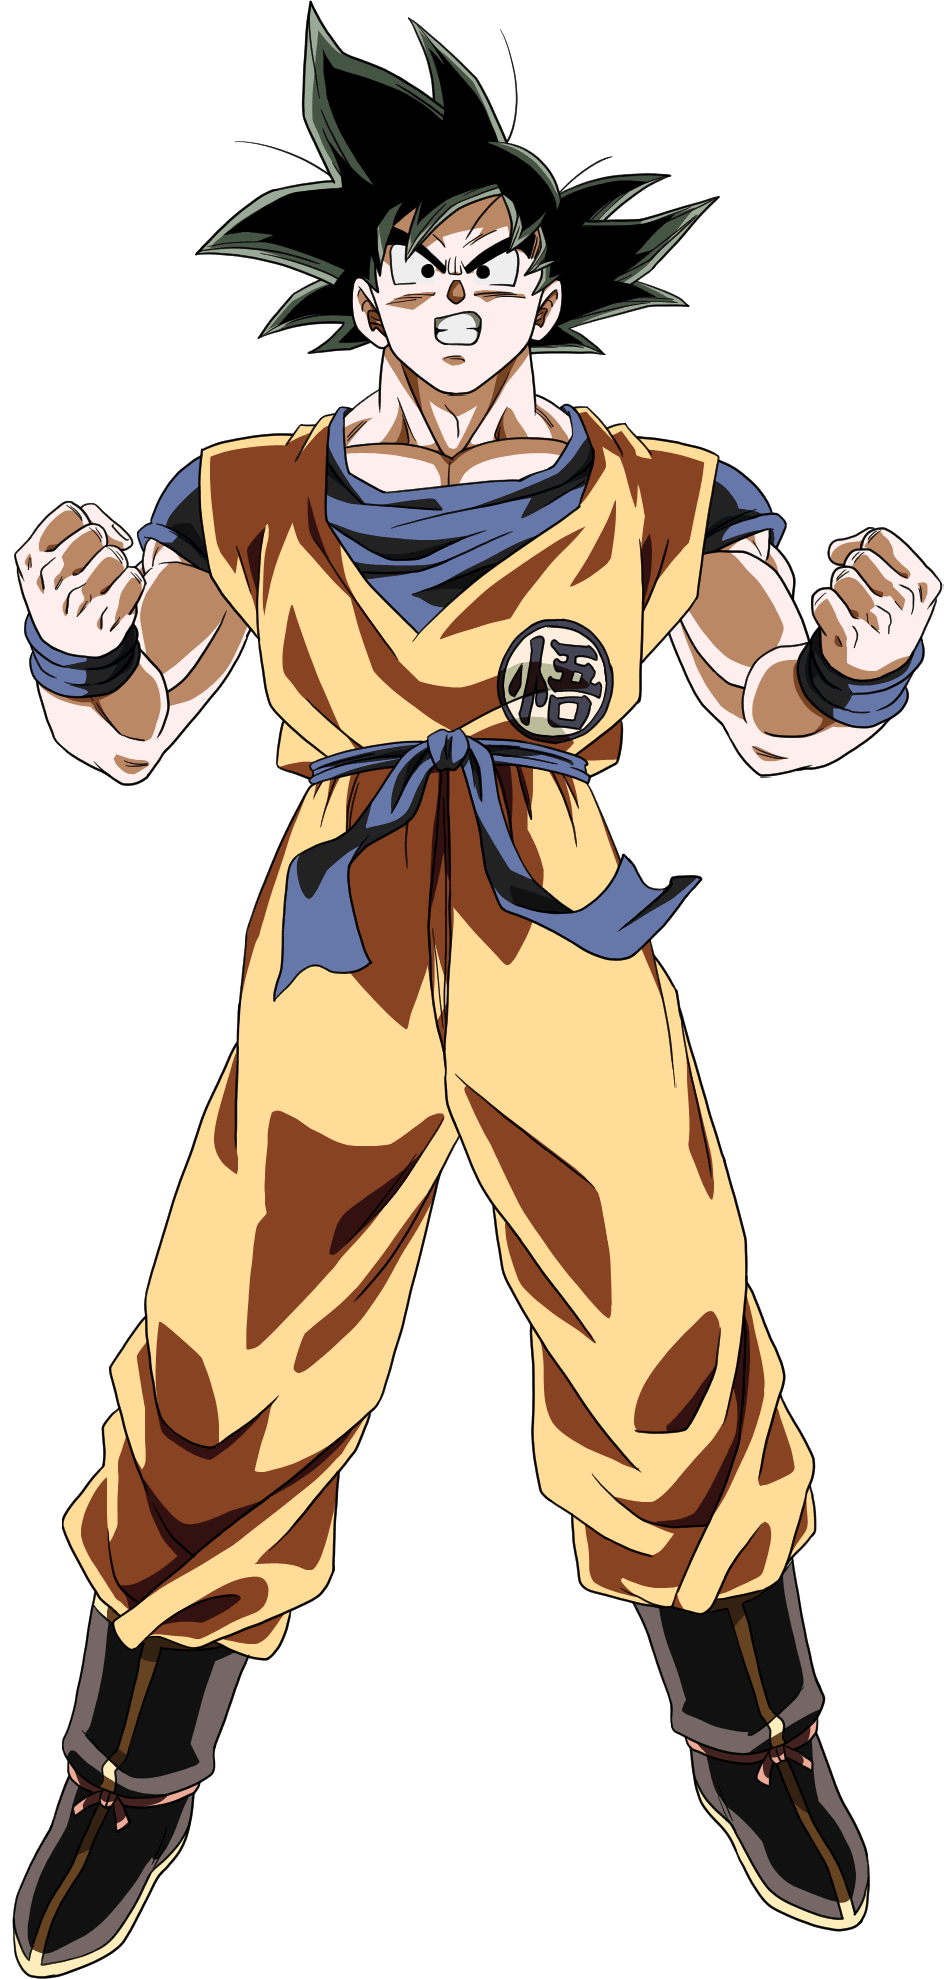 Full Power Super Saiyan 4 Goku by BrusselTheSaiyan on DeviantArt